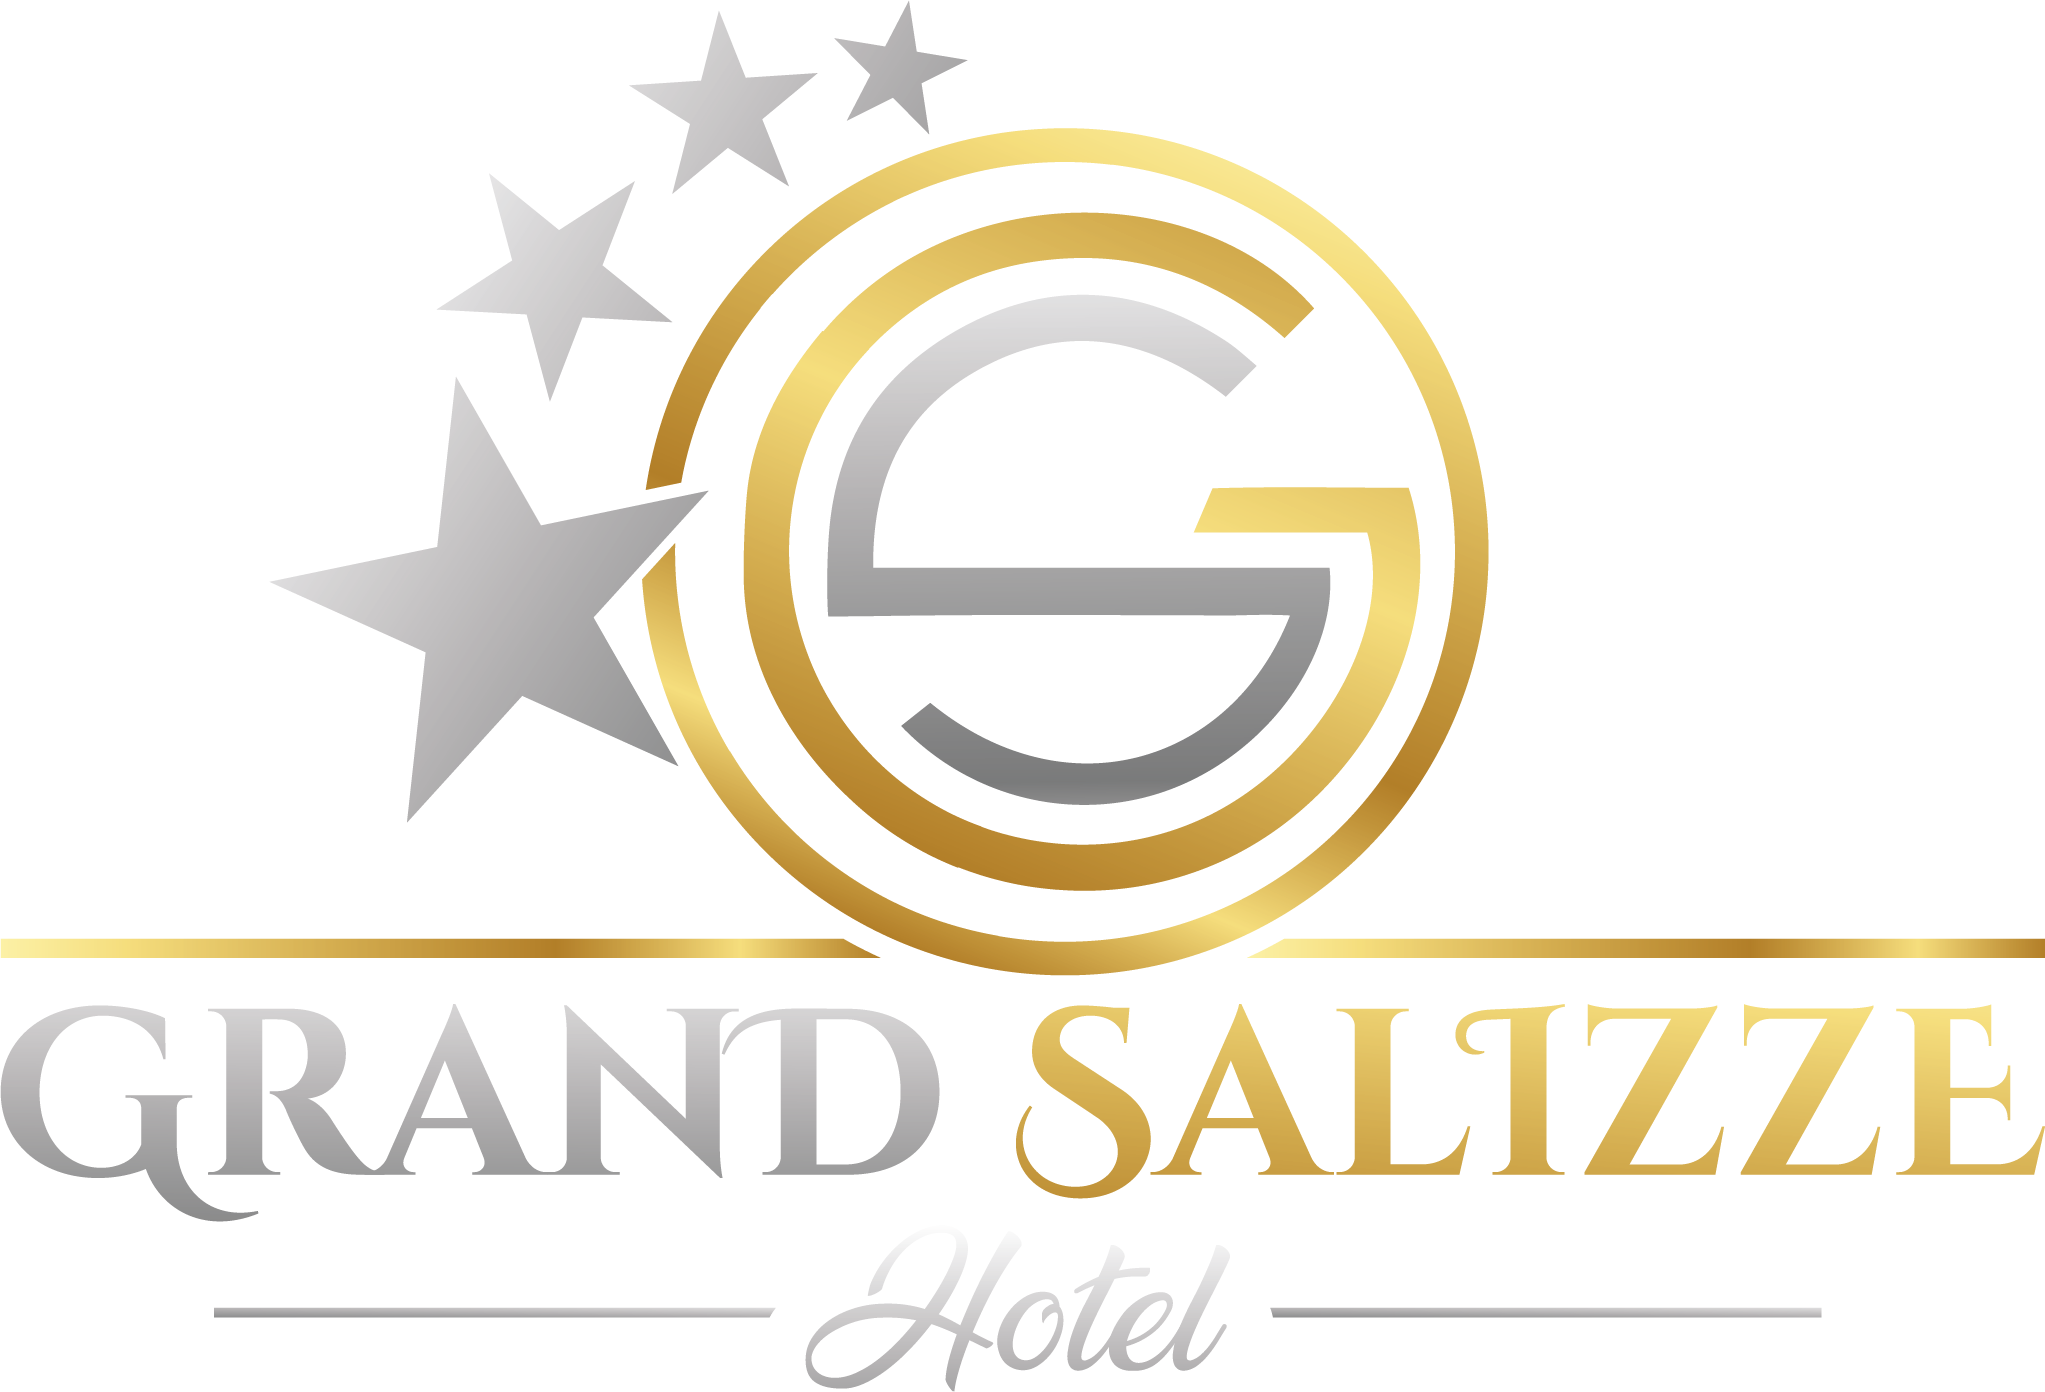 Grand Salizze Hotel